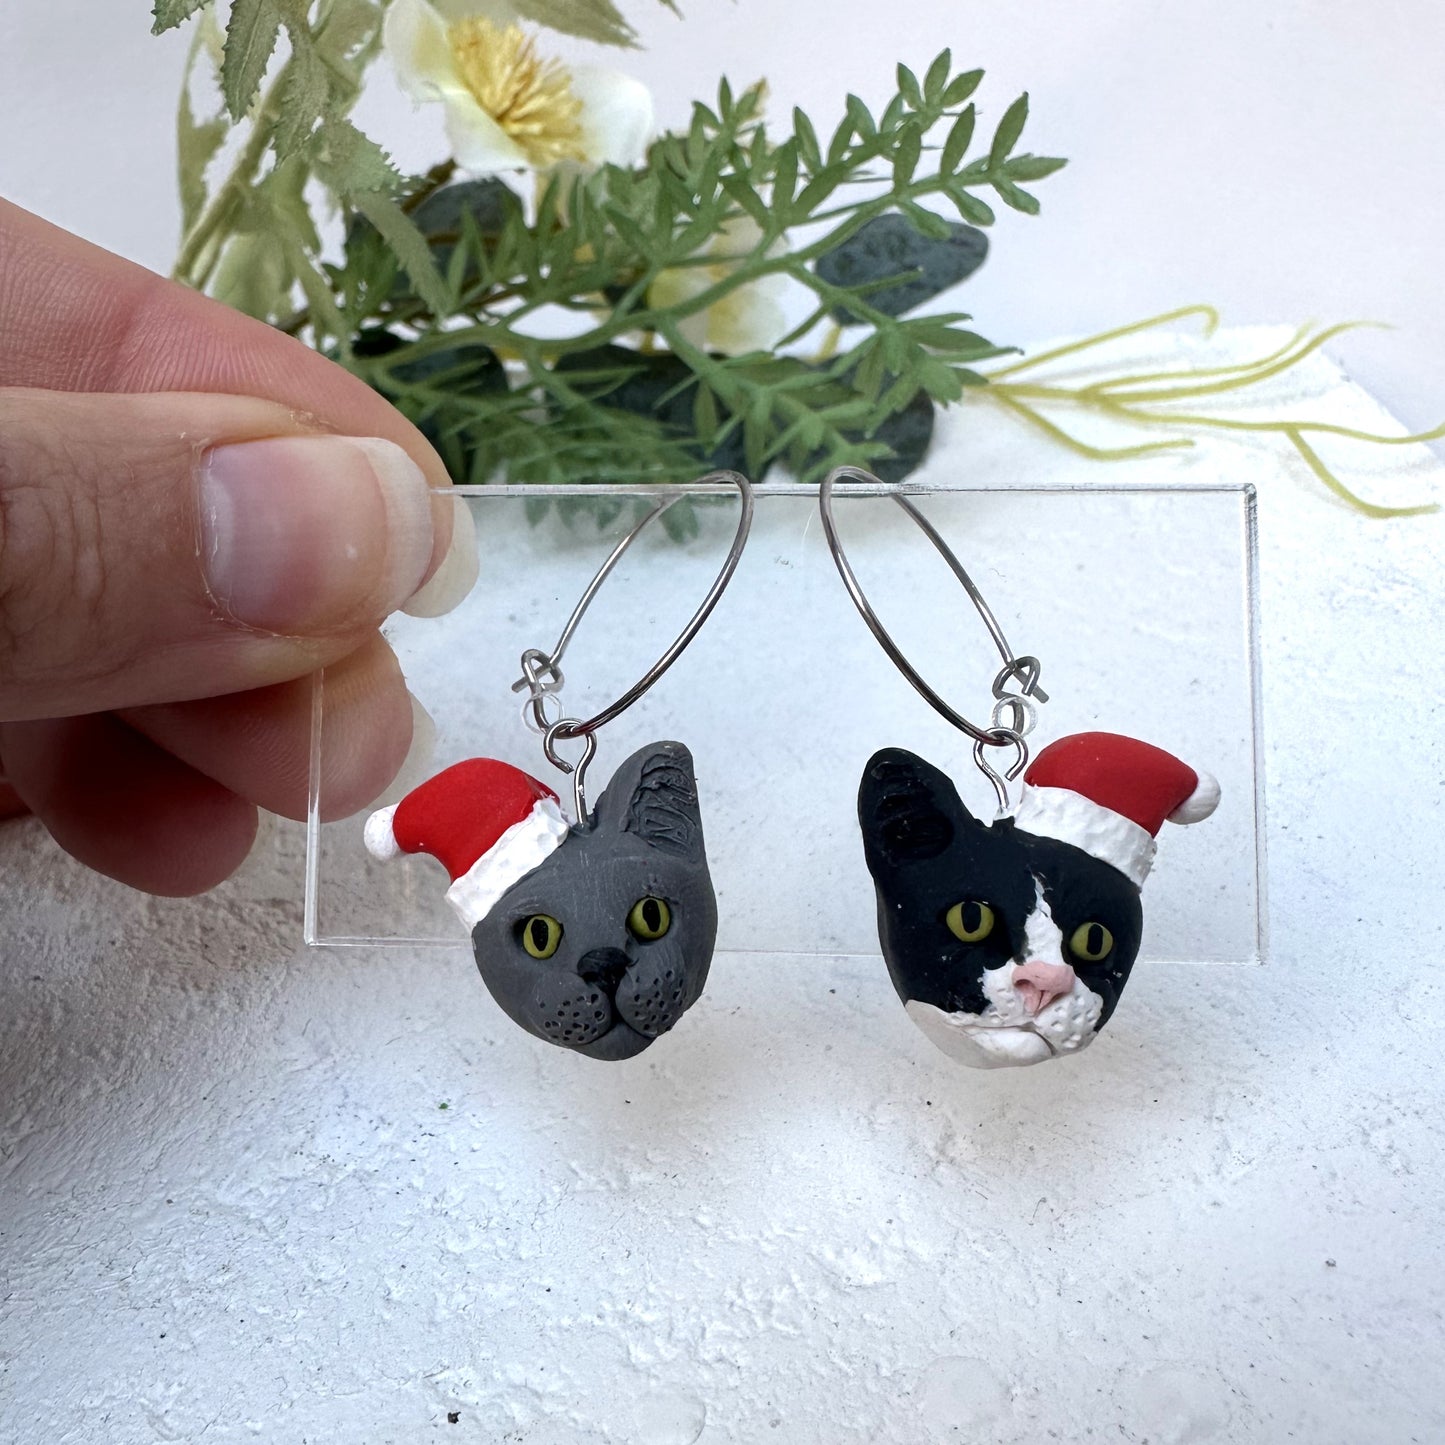 Handmade mismatched custom cat hoop earrings wearing santa hats.